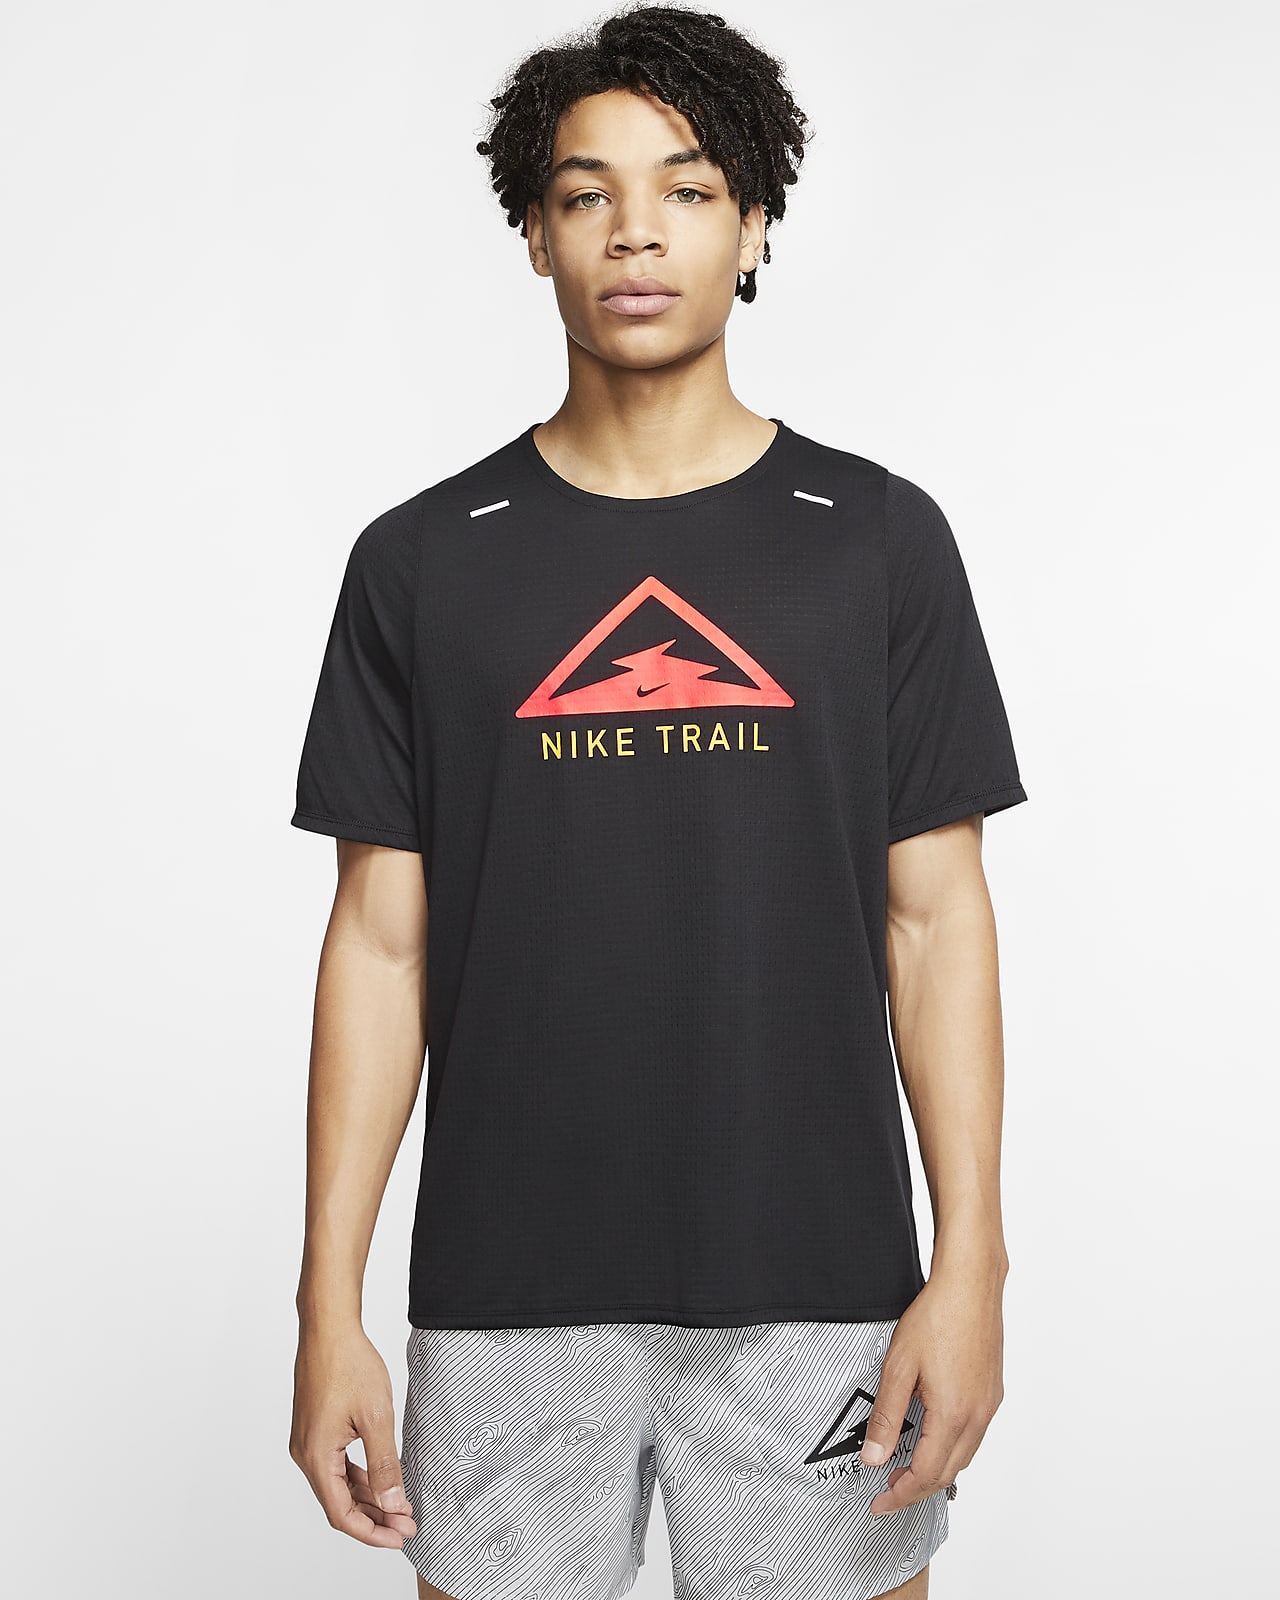 nike trail t shirt black